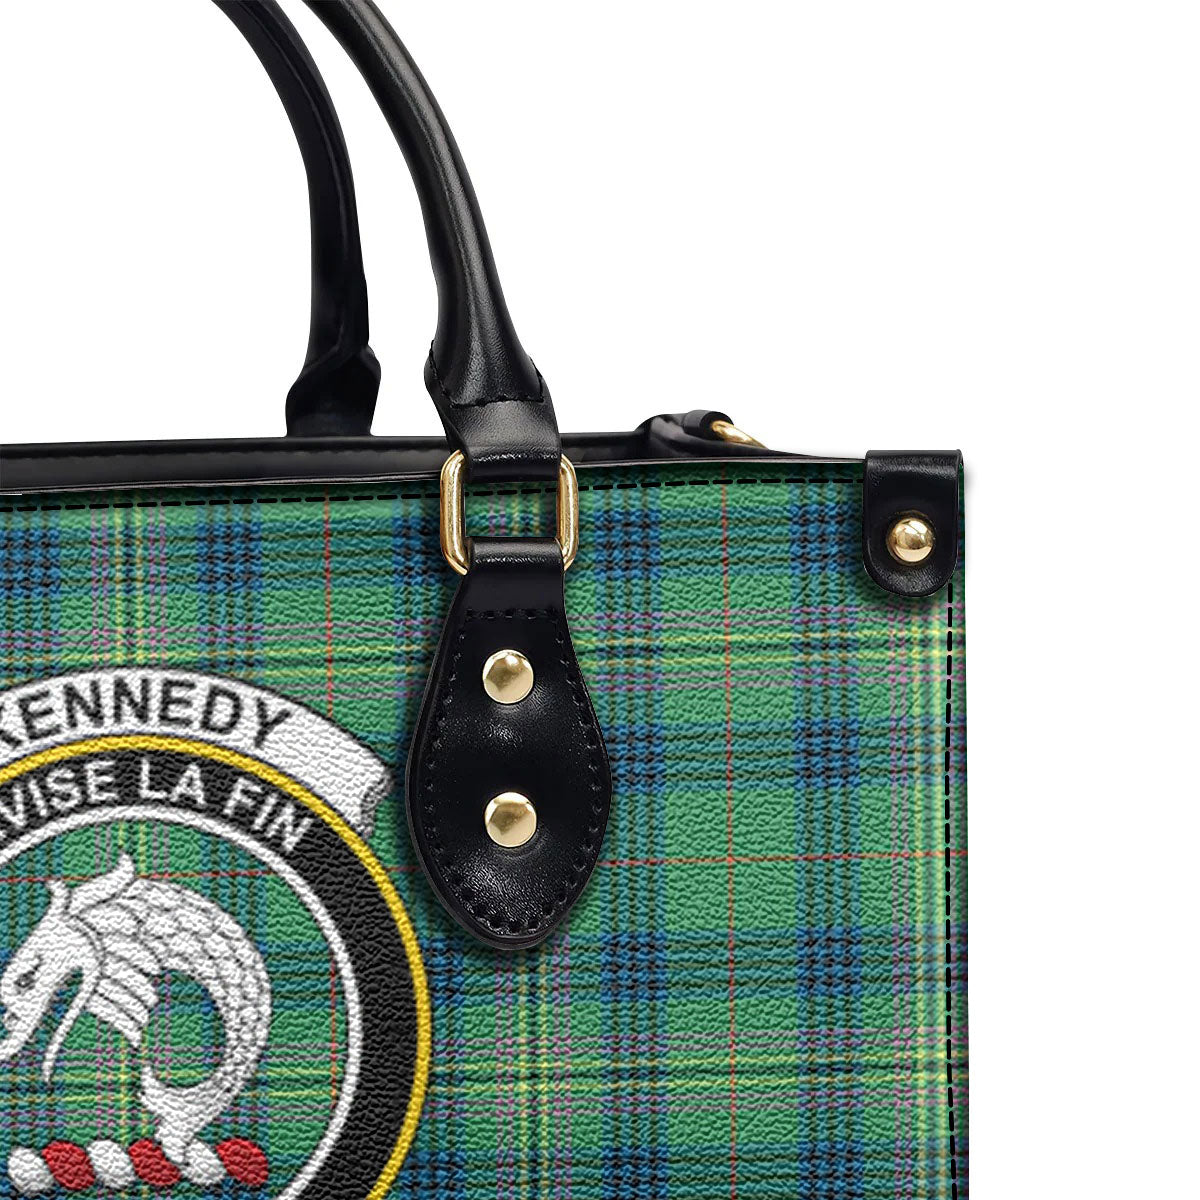 Kennedy Ancient Tartan Crest Leather Handbag